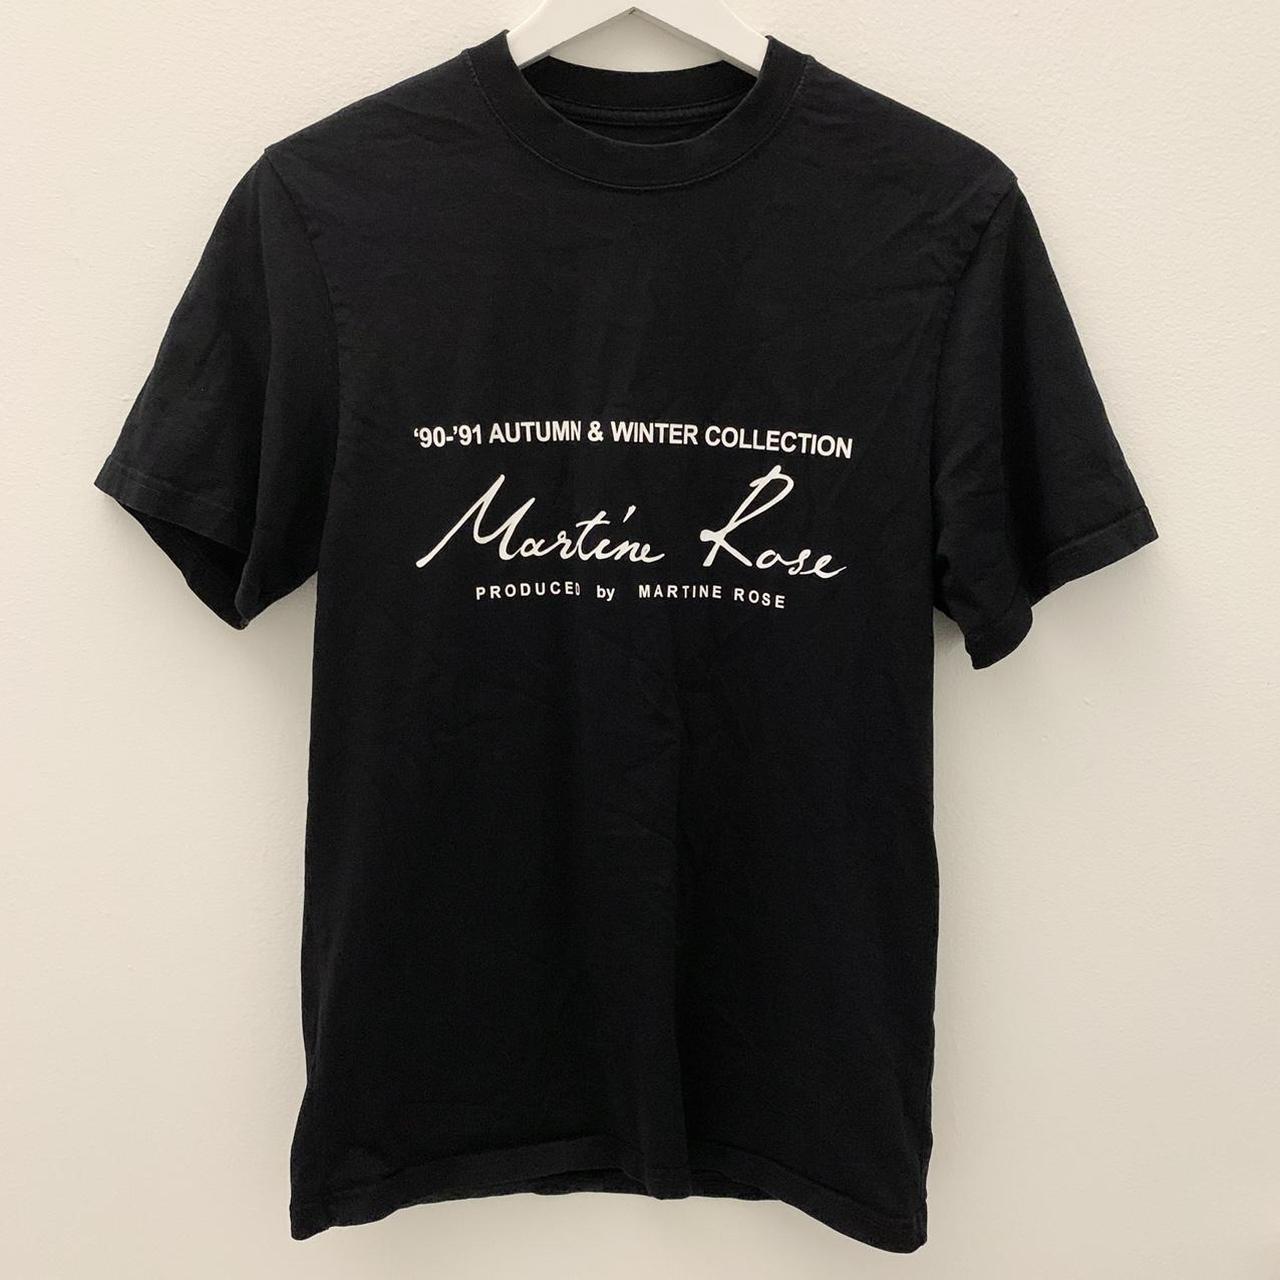 Product Image 1 - Martine Rose Black T-Shirt

Men’s XS